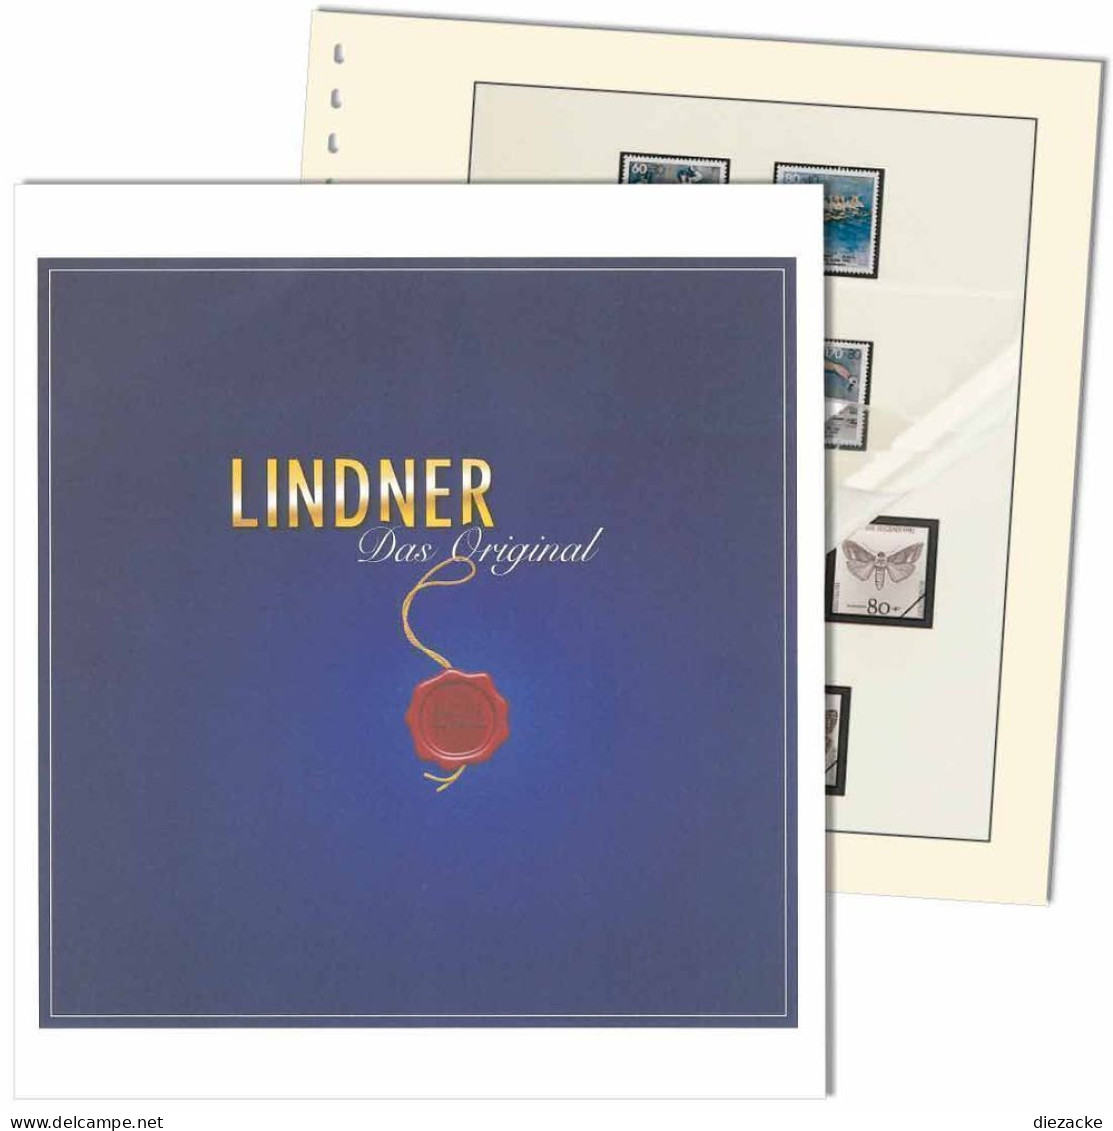 Lindner-T Frankreich Sonderblätter SK-Marken 2018-19 Vordrucke 132-18SA Neuware ( - Pre-printed Pages